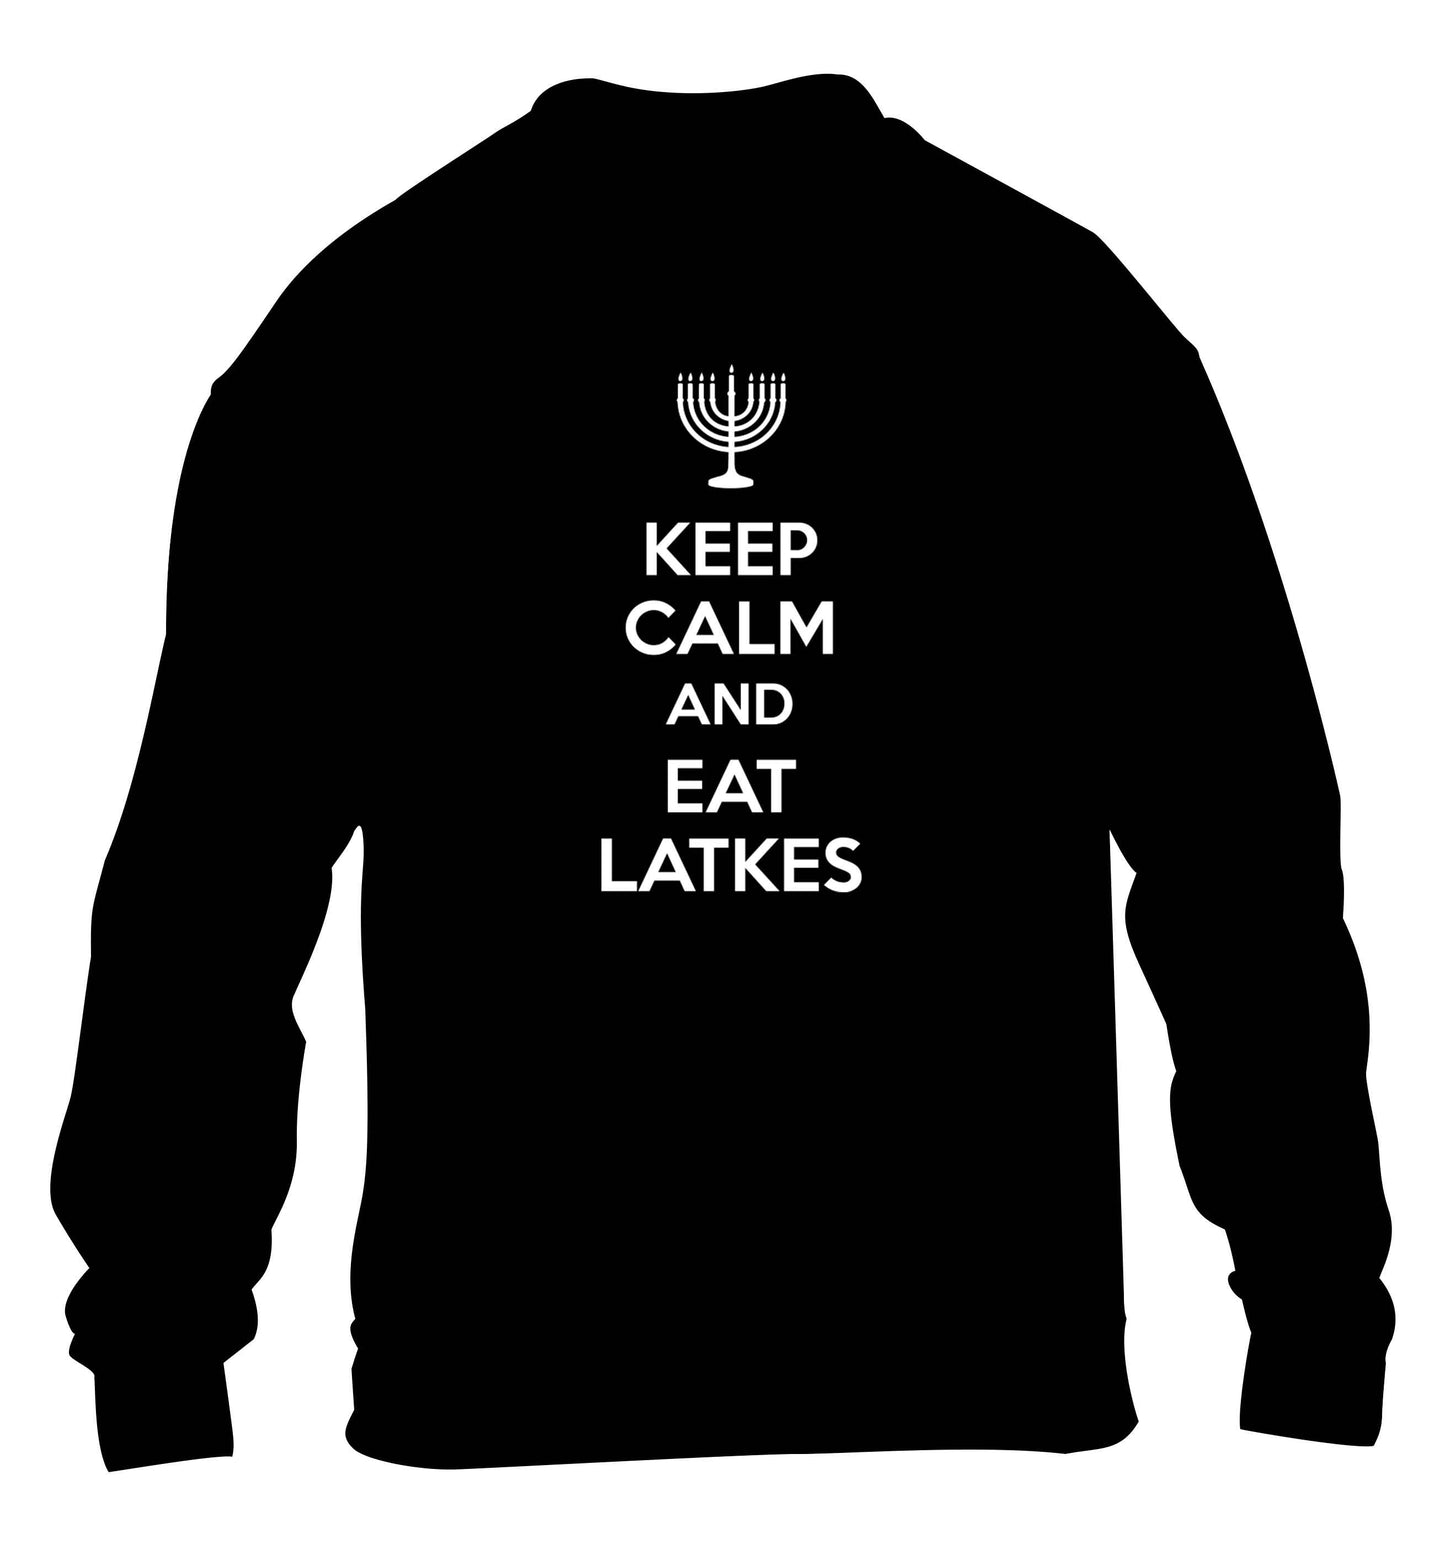 Keep calm and eat latkes children's black sweater 12-13 Years